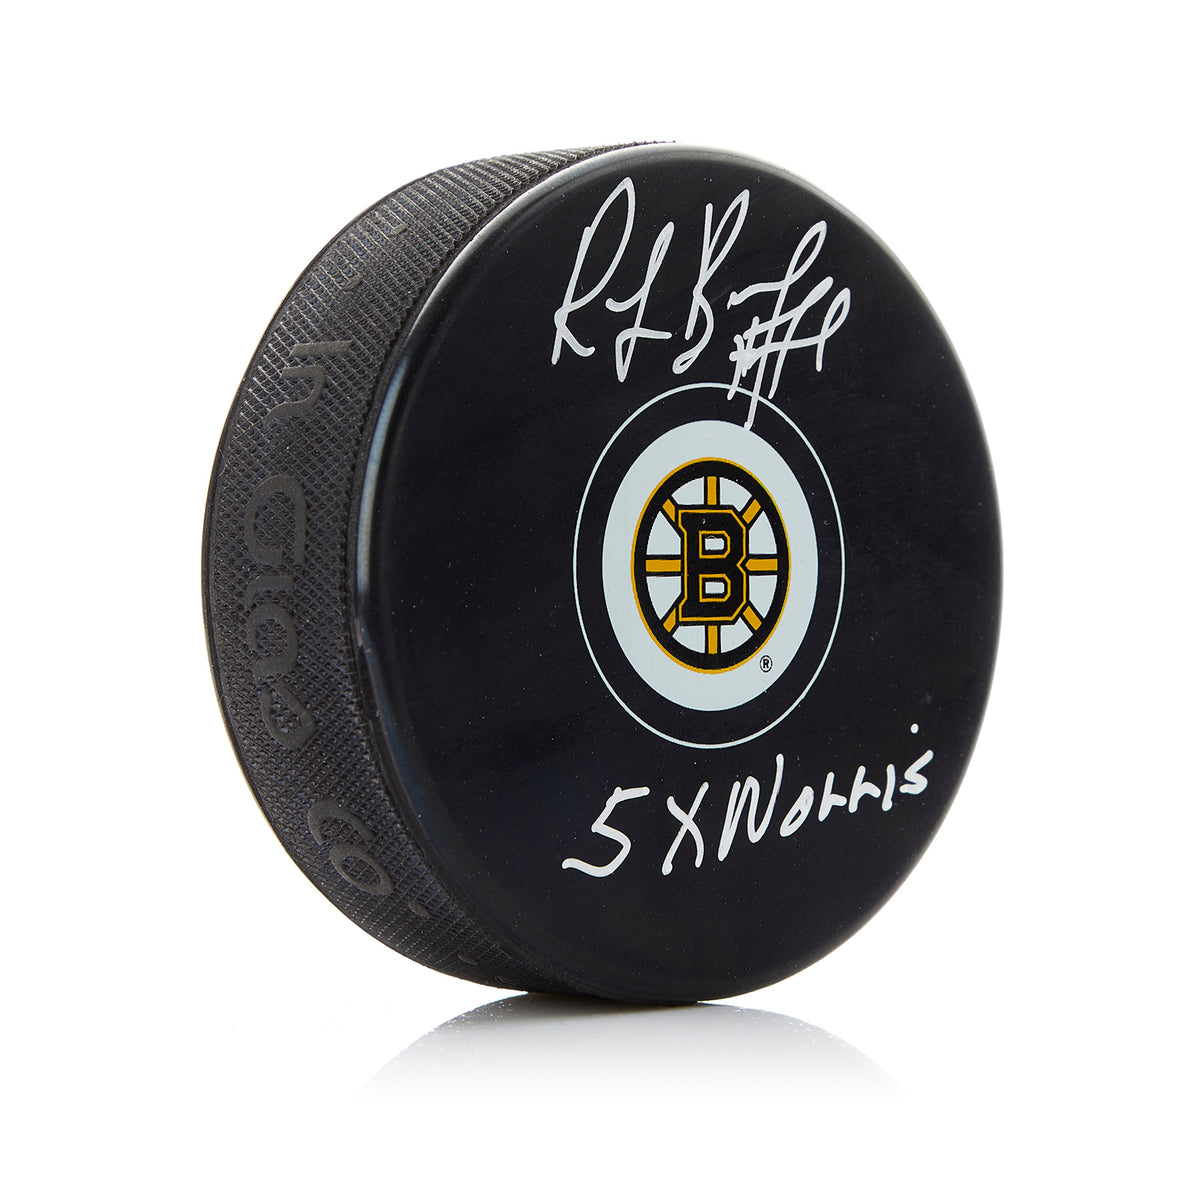 Ray Bourque Autographed Signed Boston Bruins 5x Norris Retro Fanatics Jersey